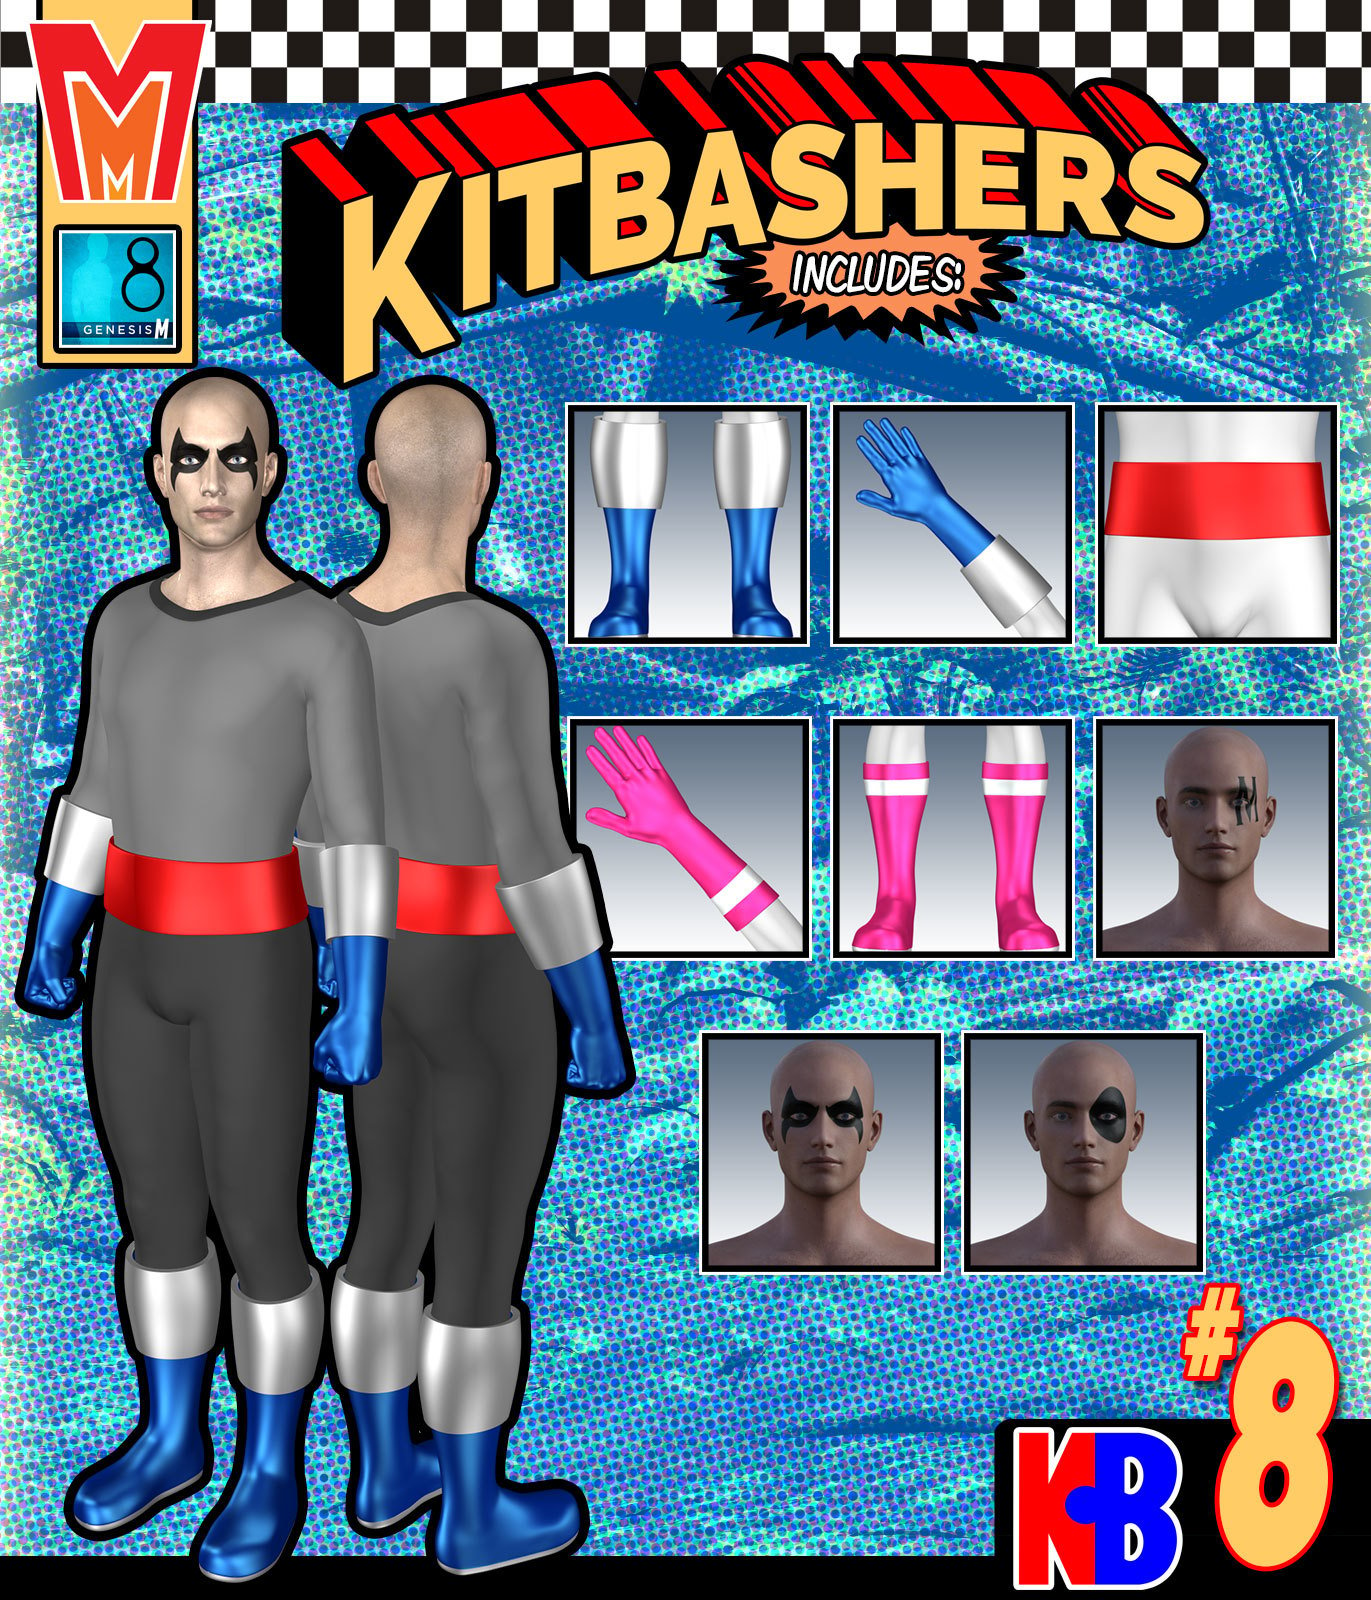 Kitbashers 008 MMG8M by: MightyMite, 3D Models by Daz 3D